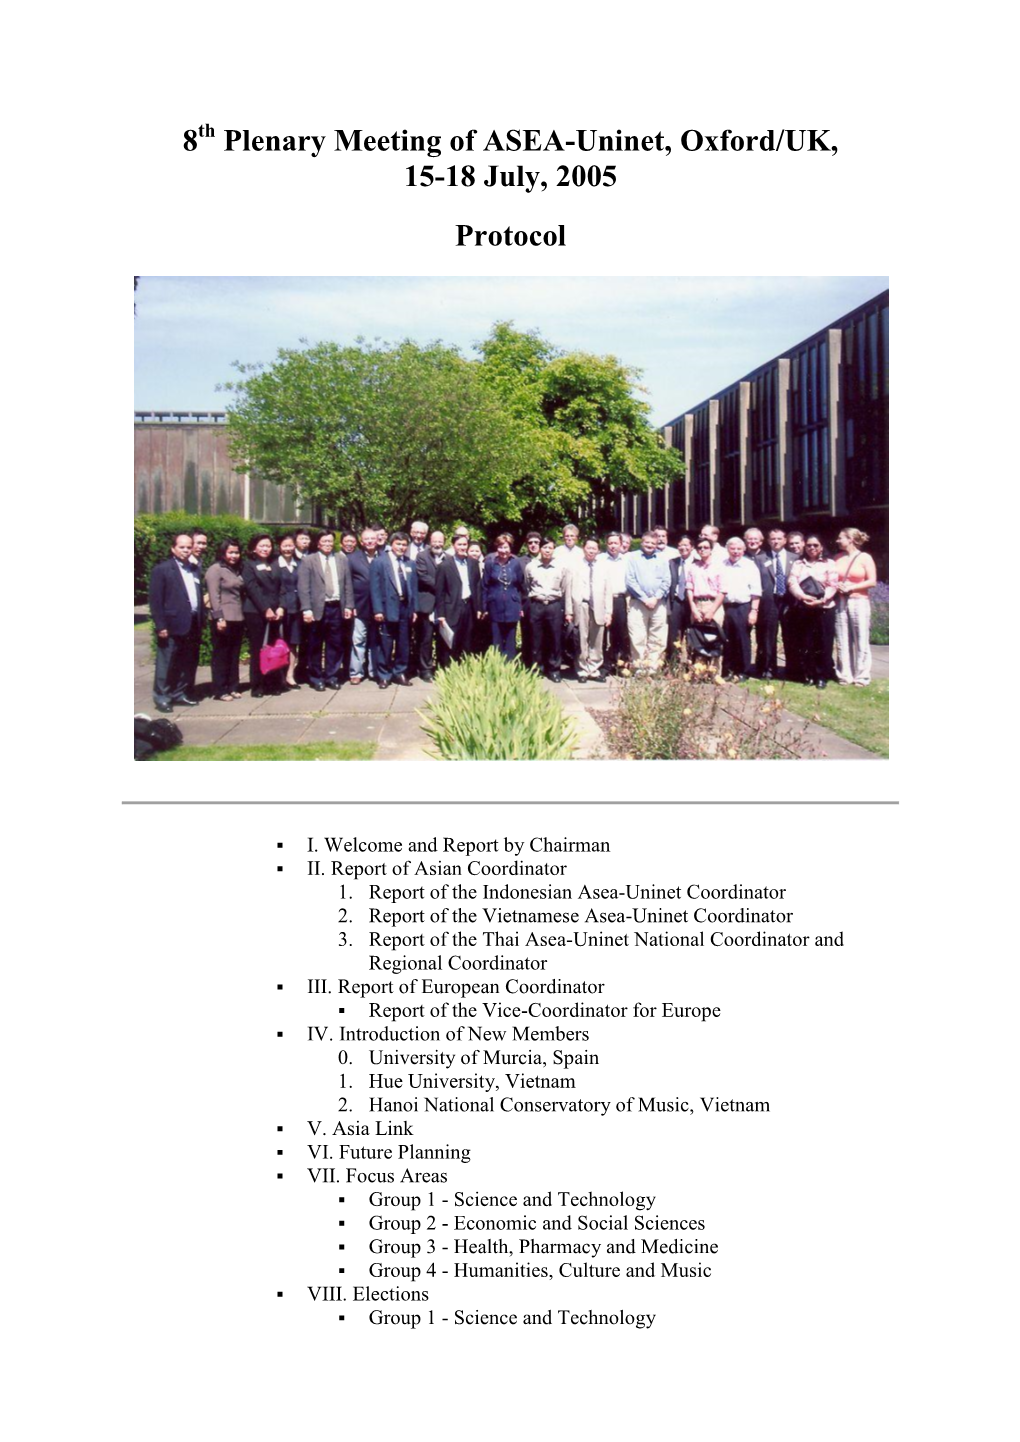 8 Plenary Meeting of ASEA-Uninet, Oxford/UK, 15-18 July, 2005 Protocol